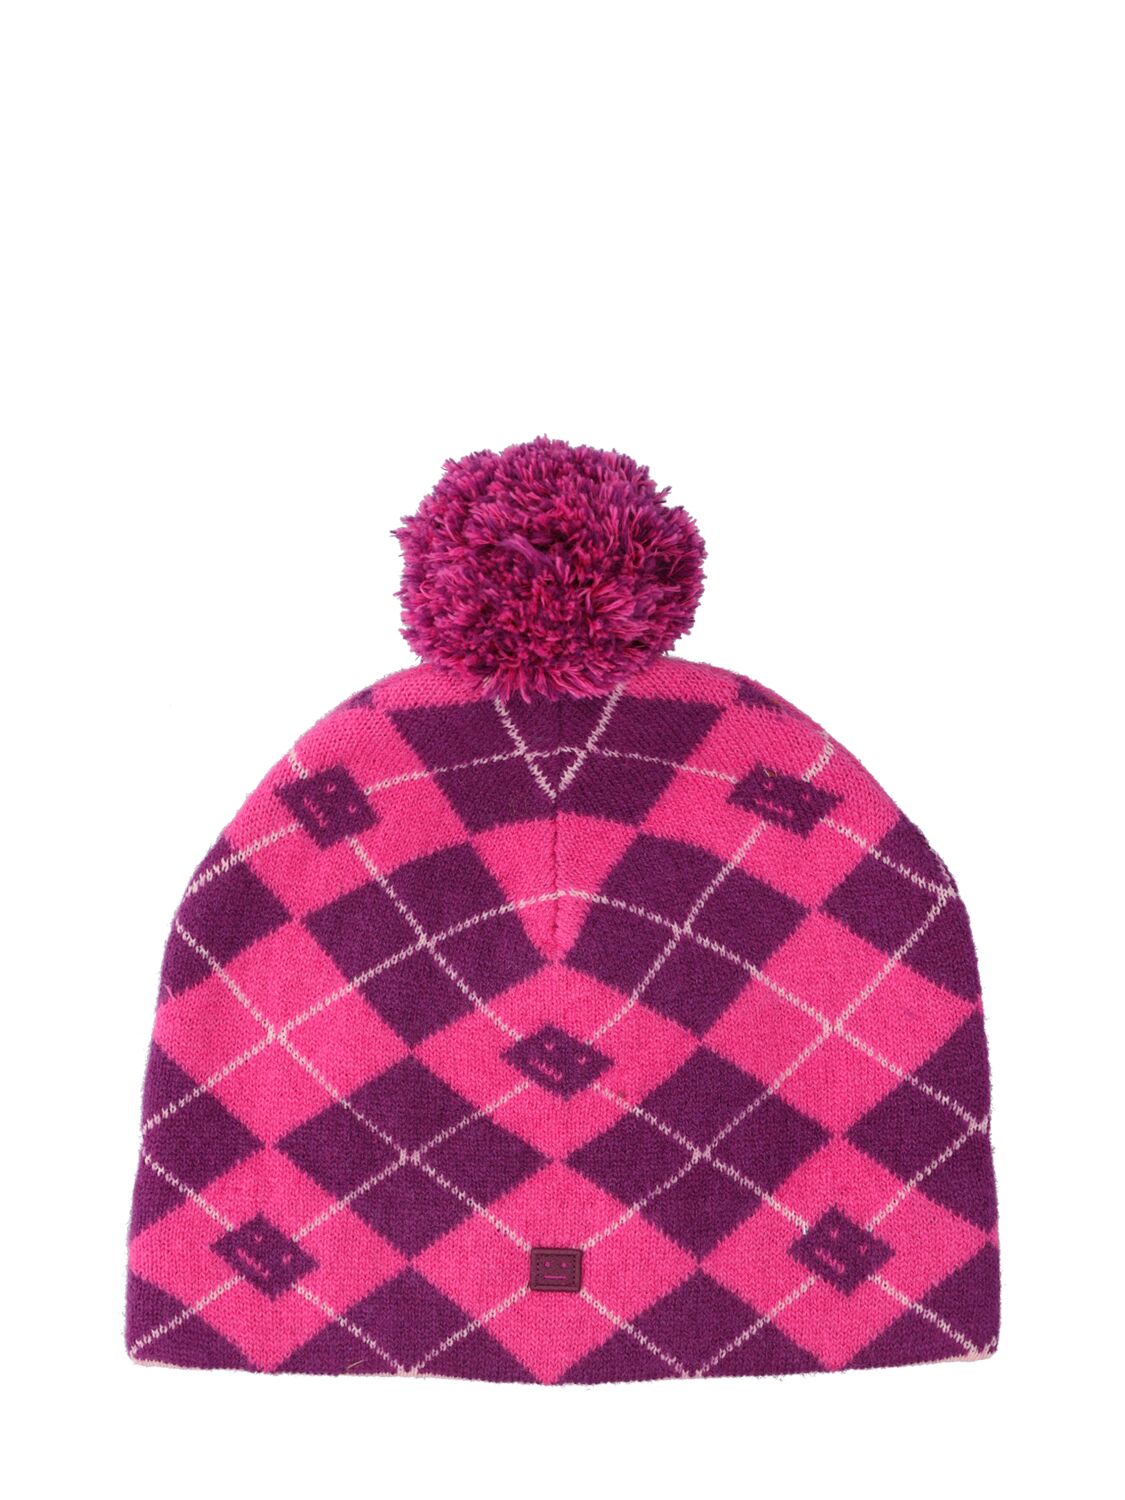 Acne Studios Kwan Wool Blend Hat In Bright Pink